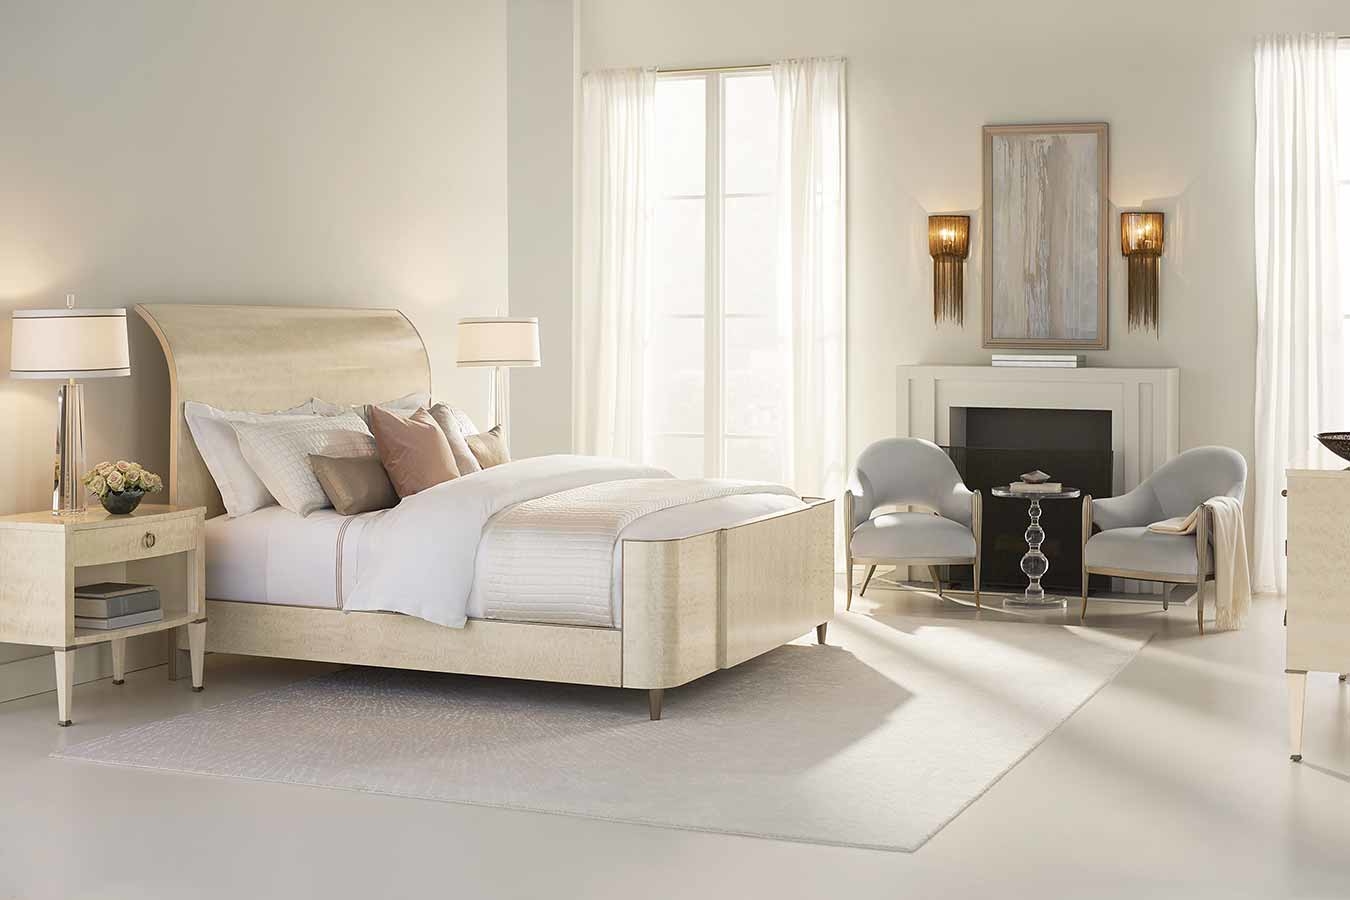 Bedroom Furniture Manufacturers List, Bedroom Furniture Manufacturers List Suppliers and Manufacturers at Alibaba